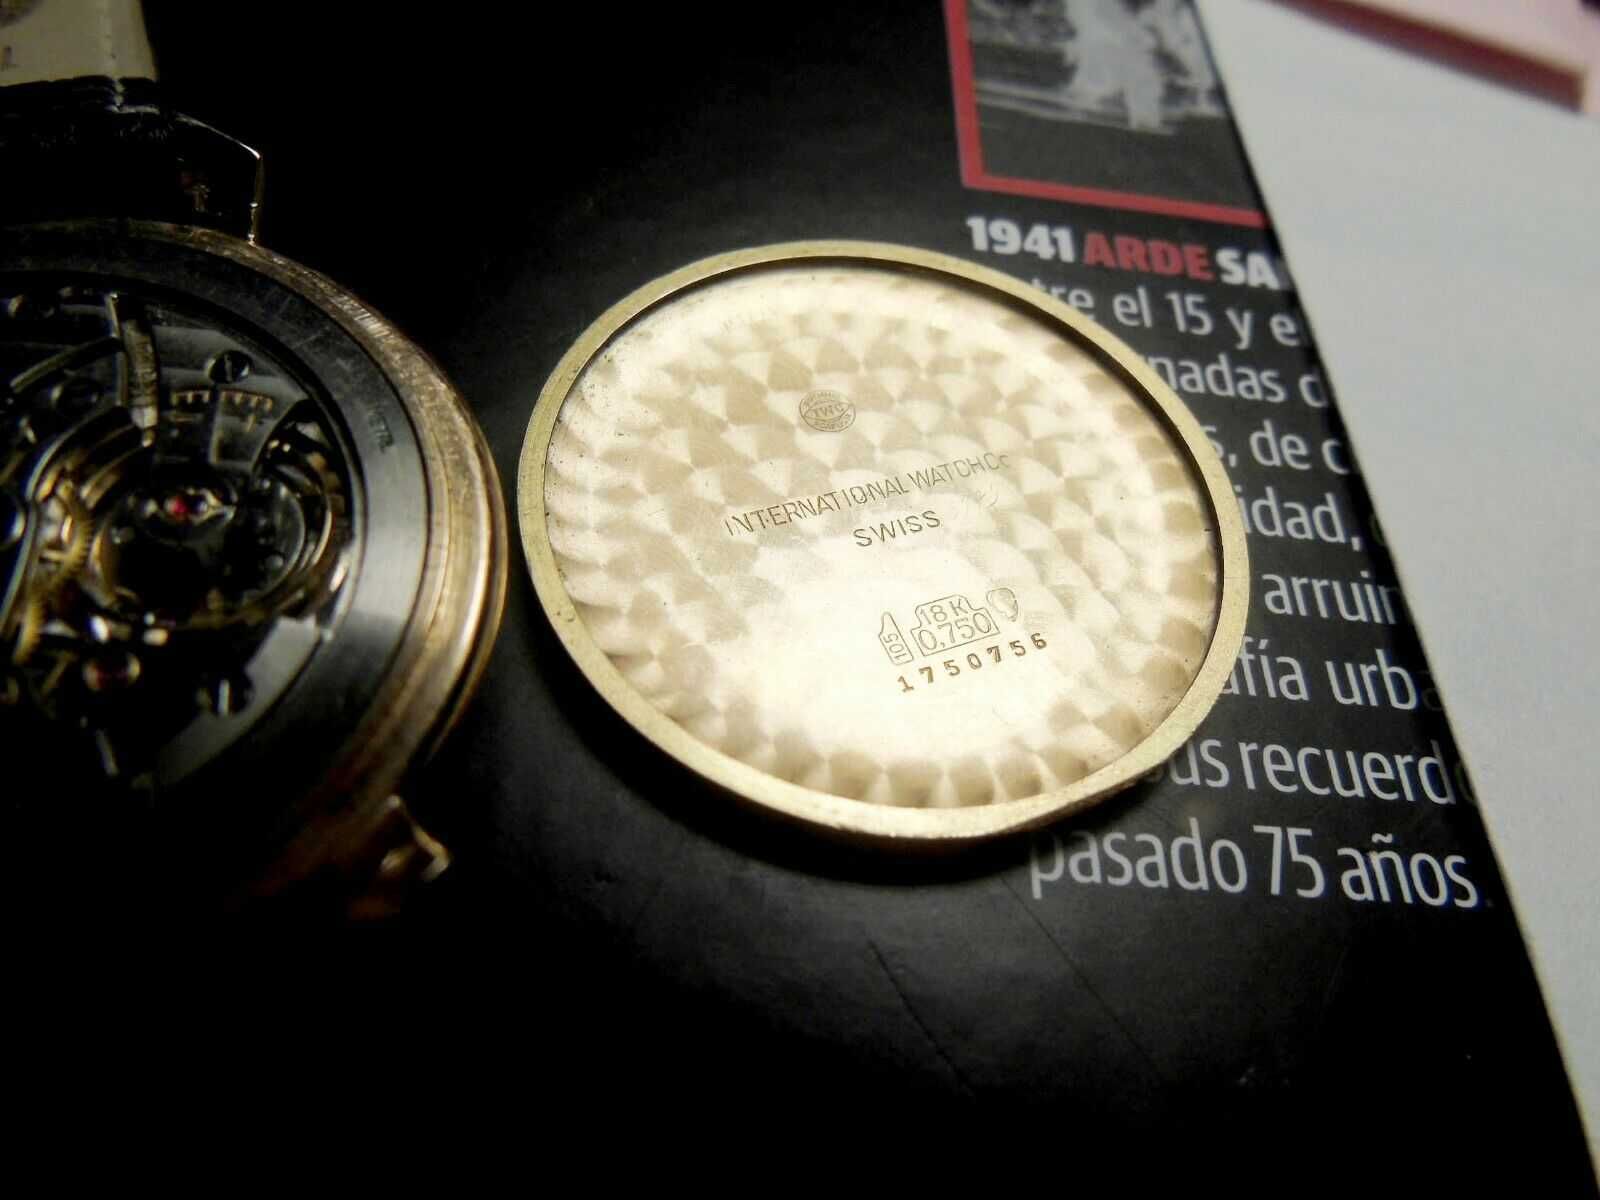 Zegarek IWC złoty  Schaffhausen,  18k/750, płetwy rekina ,38mm